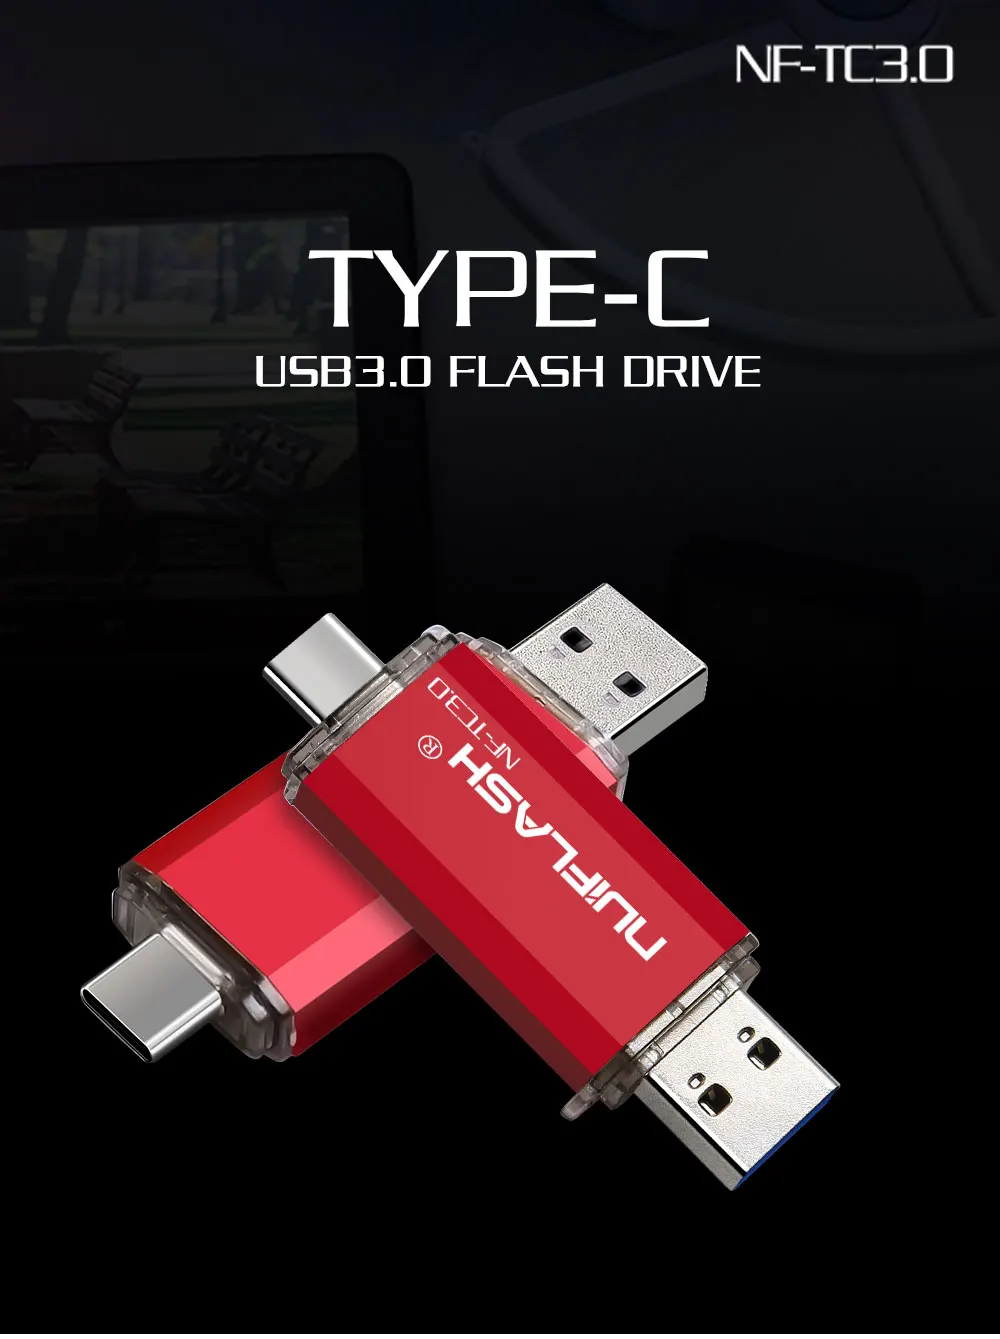 Nuiflash hotsale Usb Stick Type C Pen Drive 128GB 64GB 32GB 16GB USB Flash Drive 3.0 High Speed Pendrive for Type-C Device